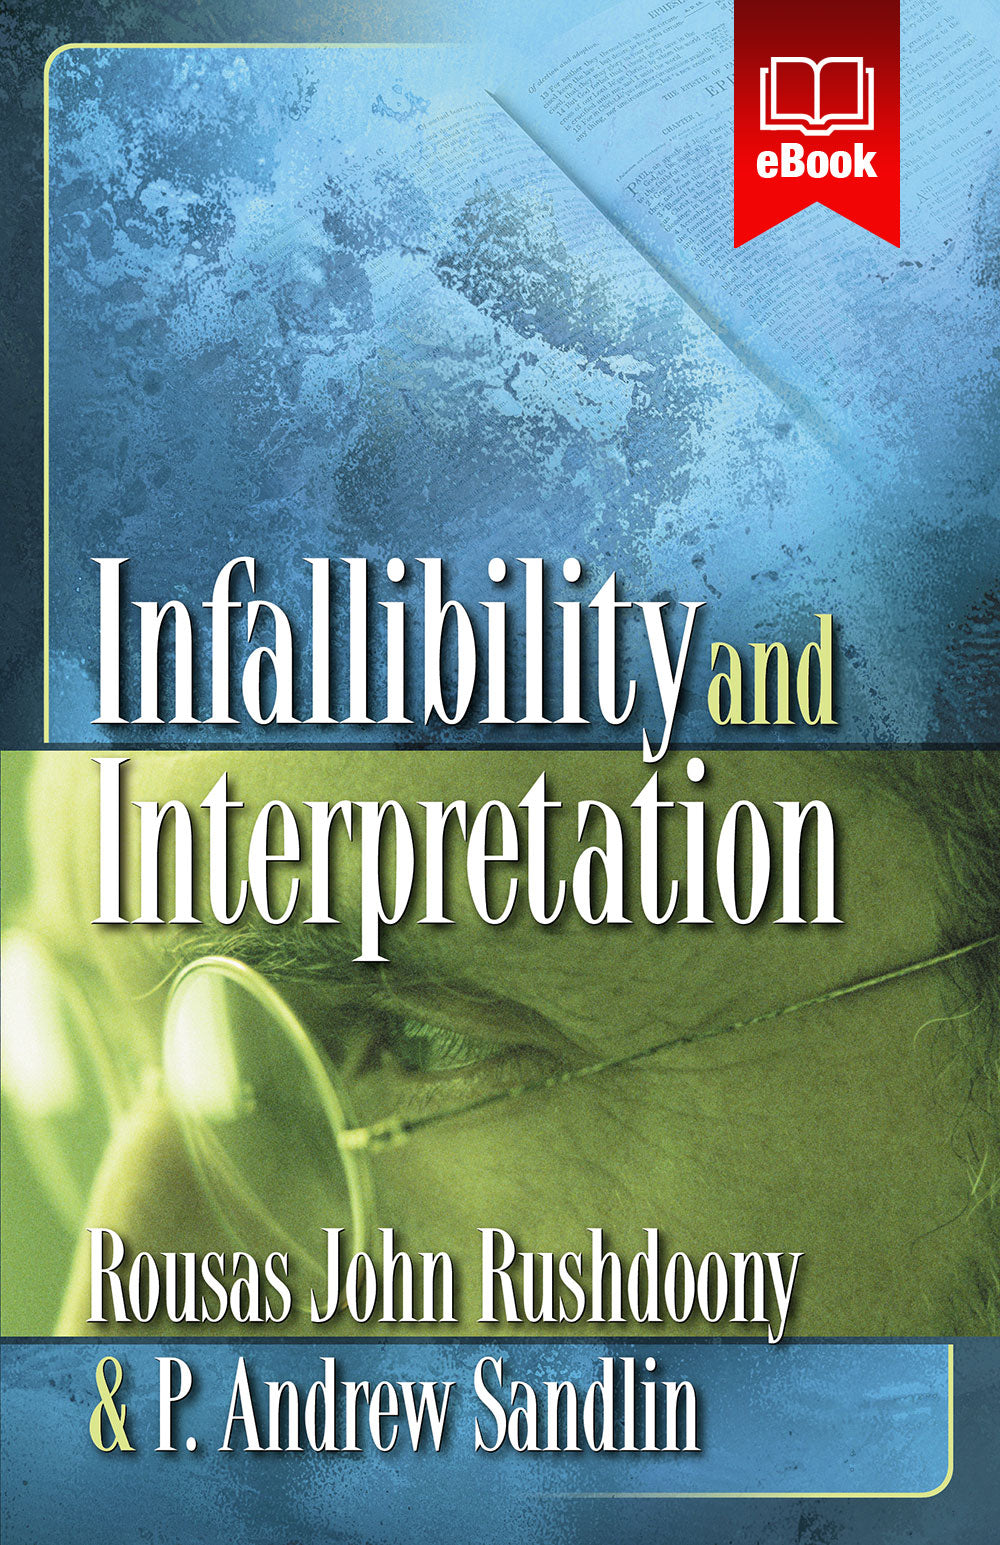 Infallibility and Interpretation